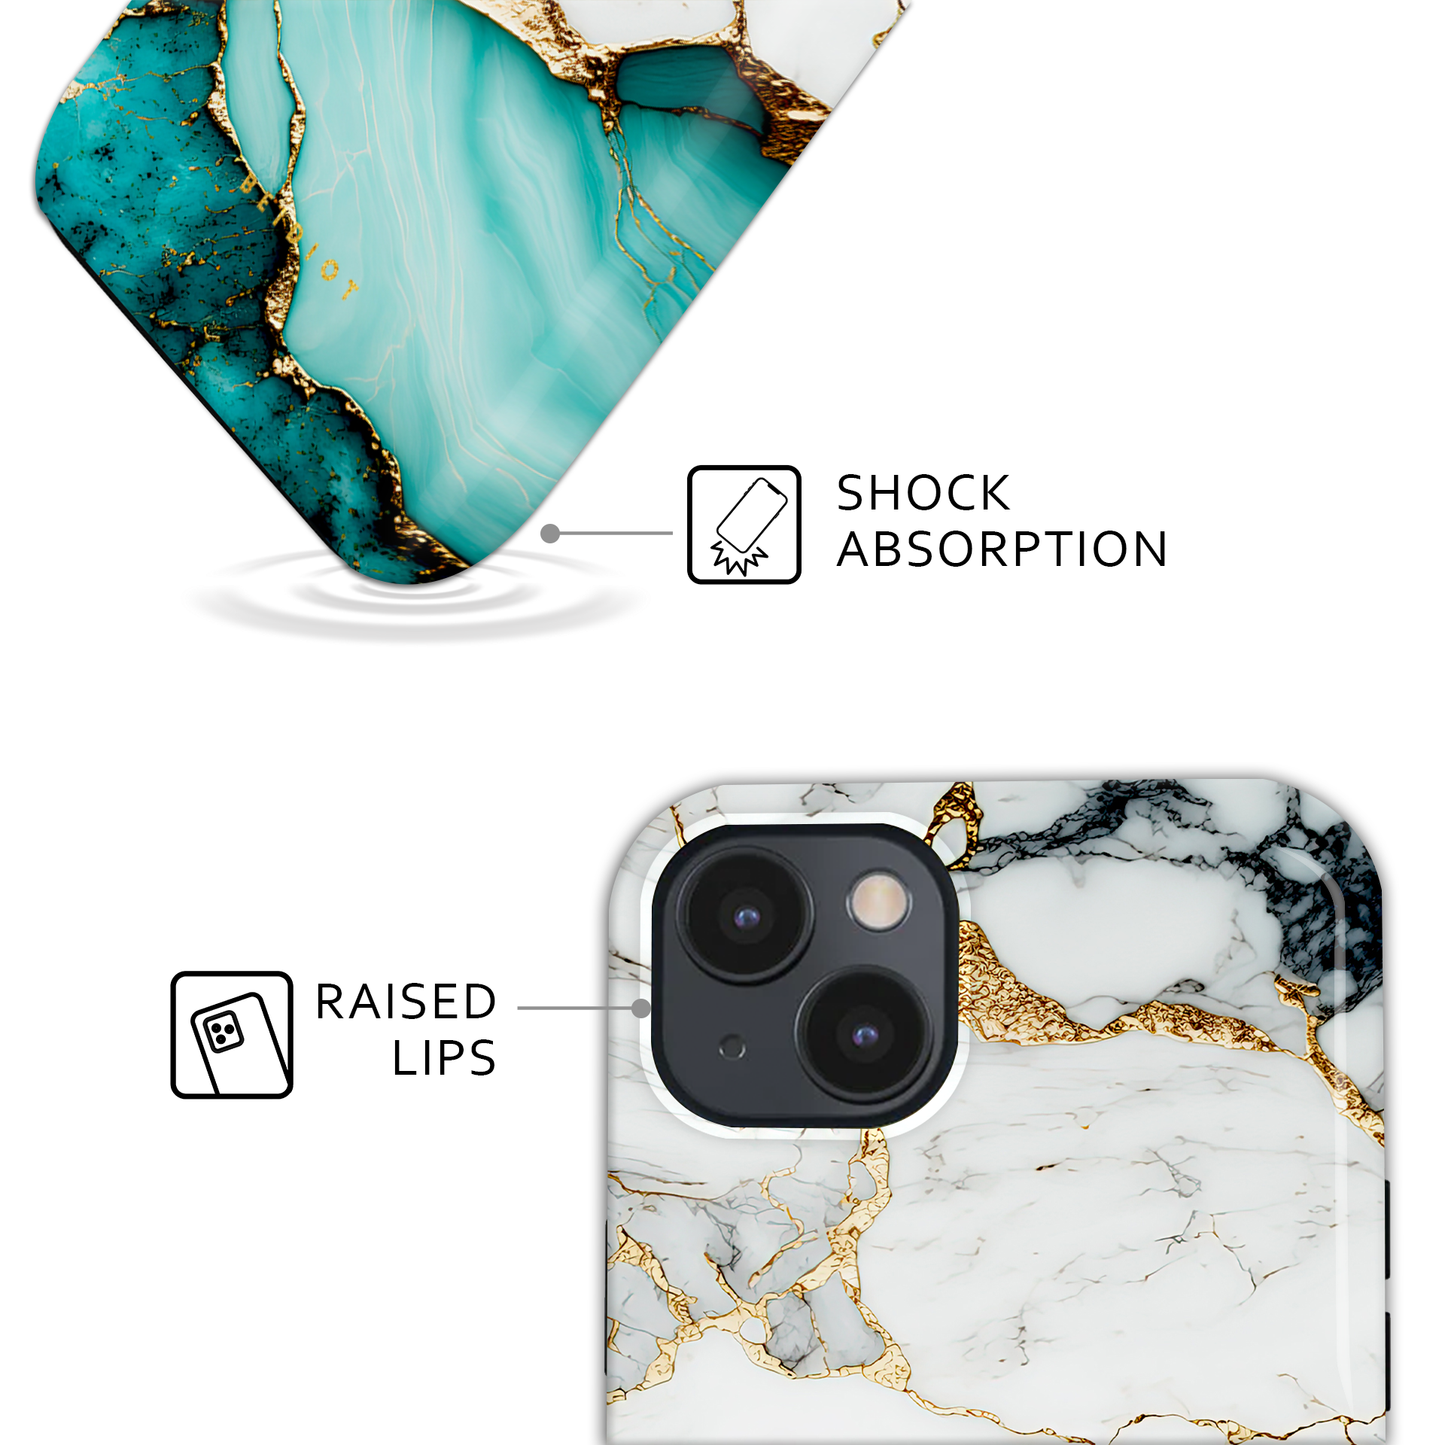 Turquoise iPhone Case